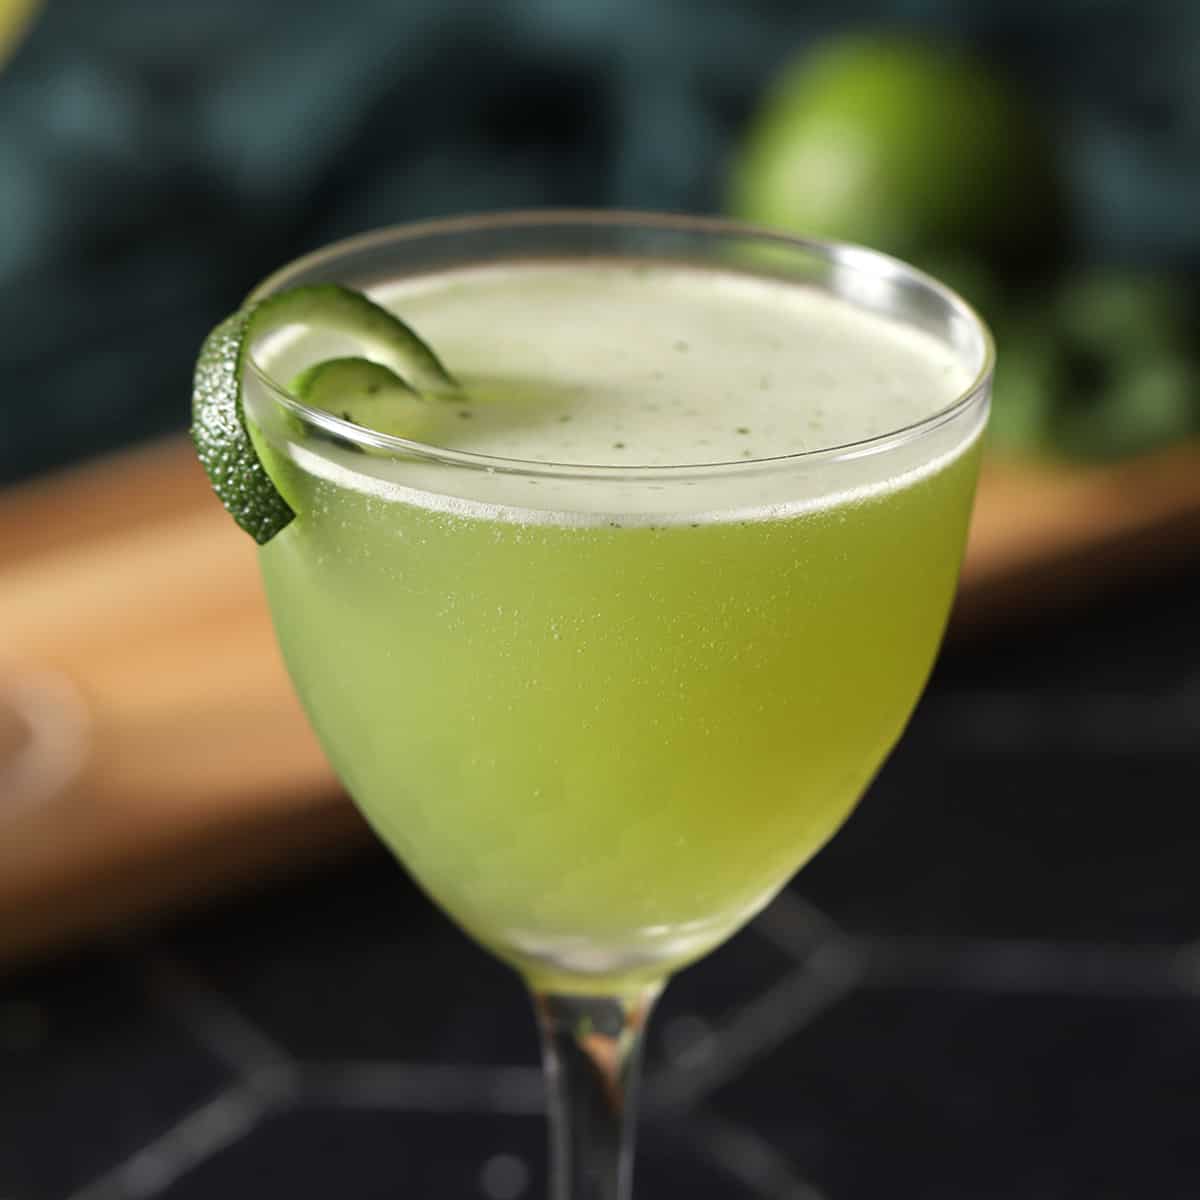 A glass of basil gimlet cocktail.